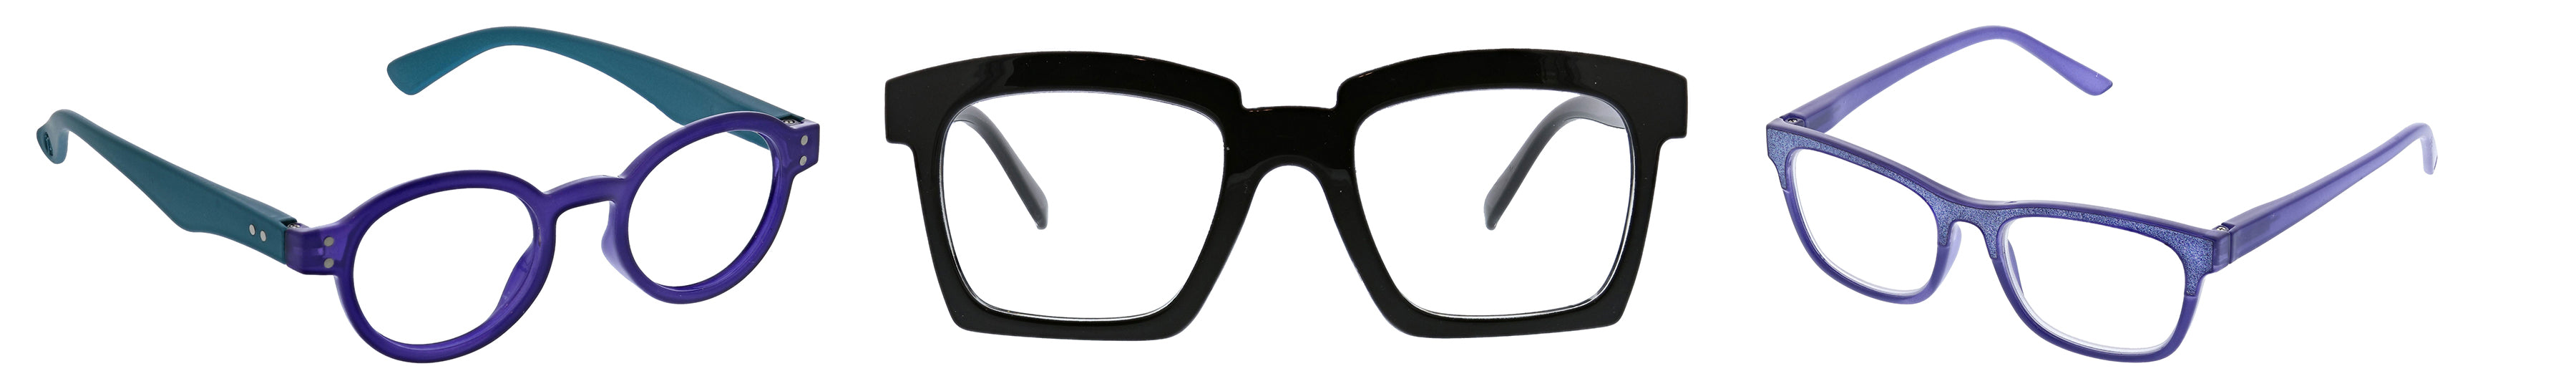 Peepers glasses